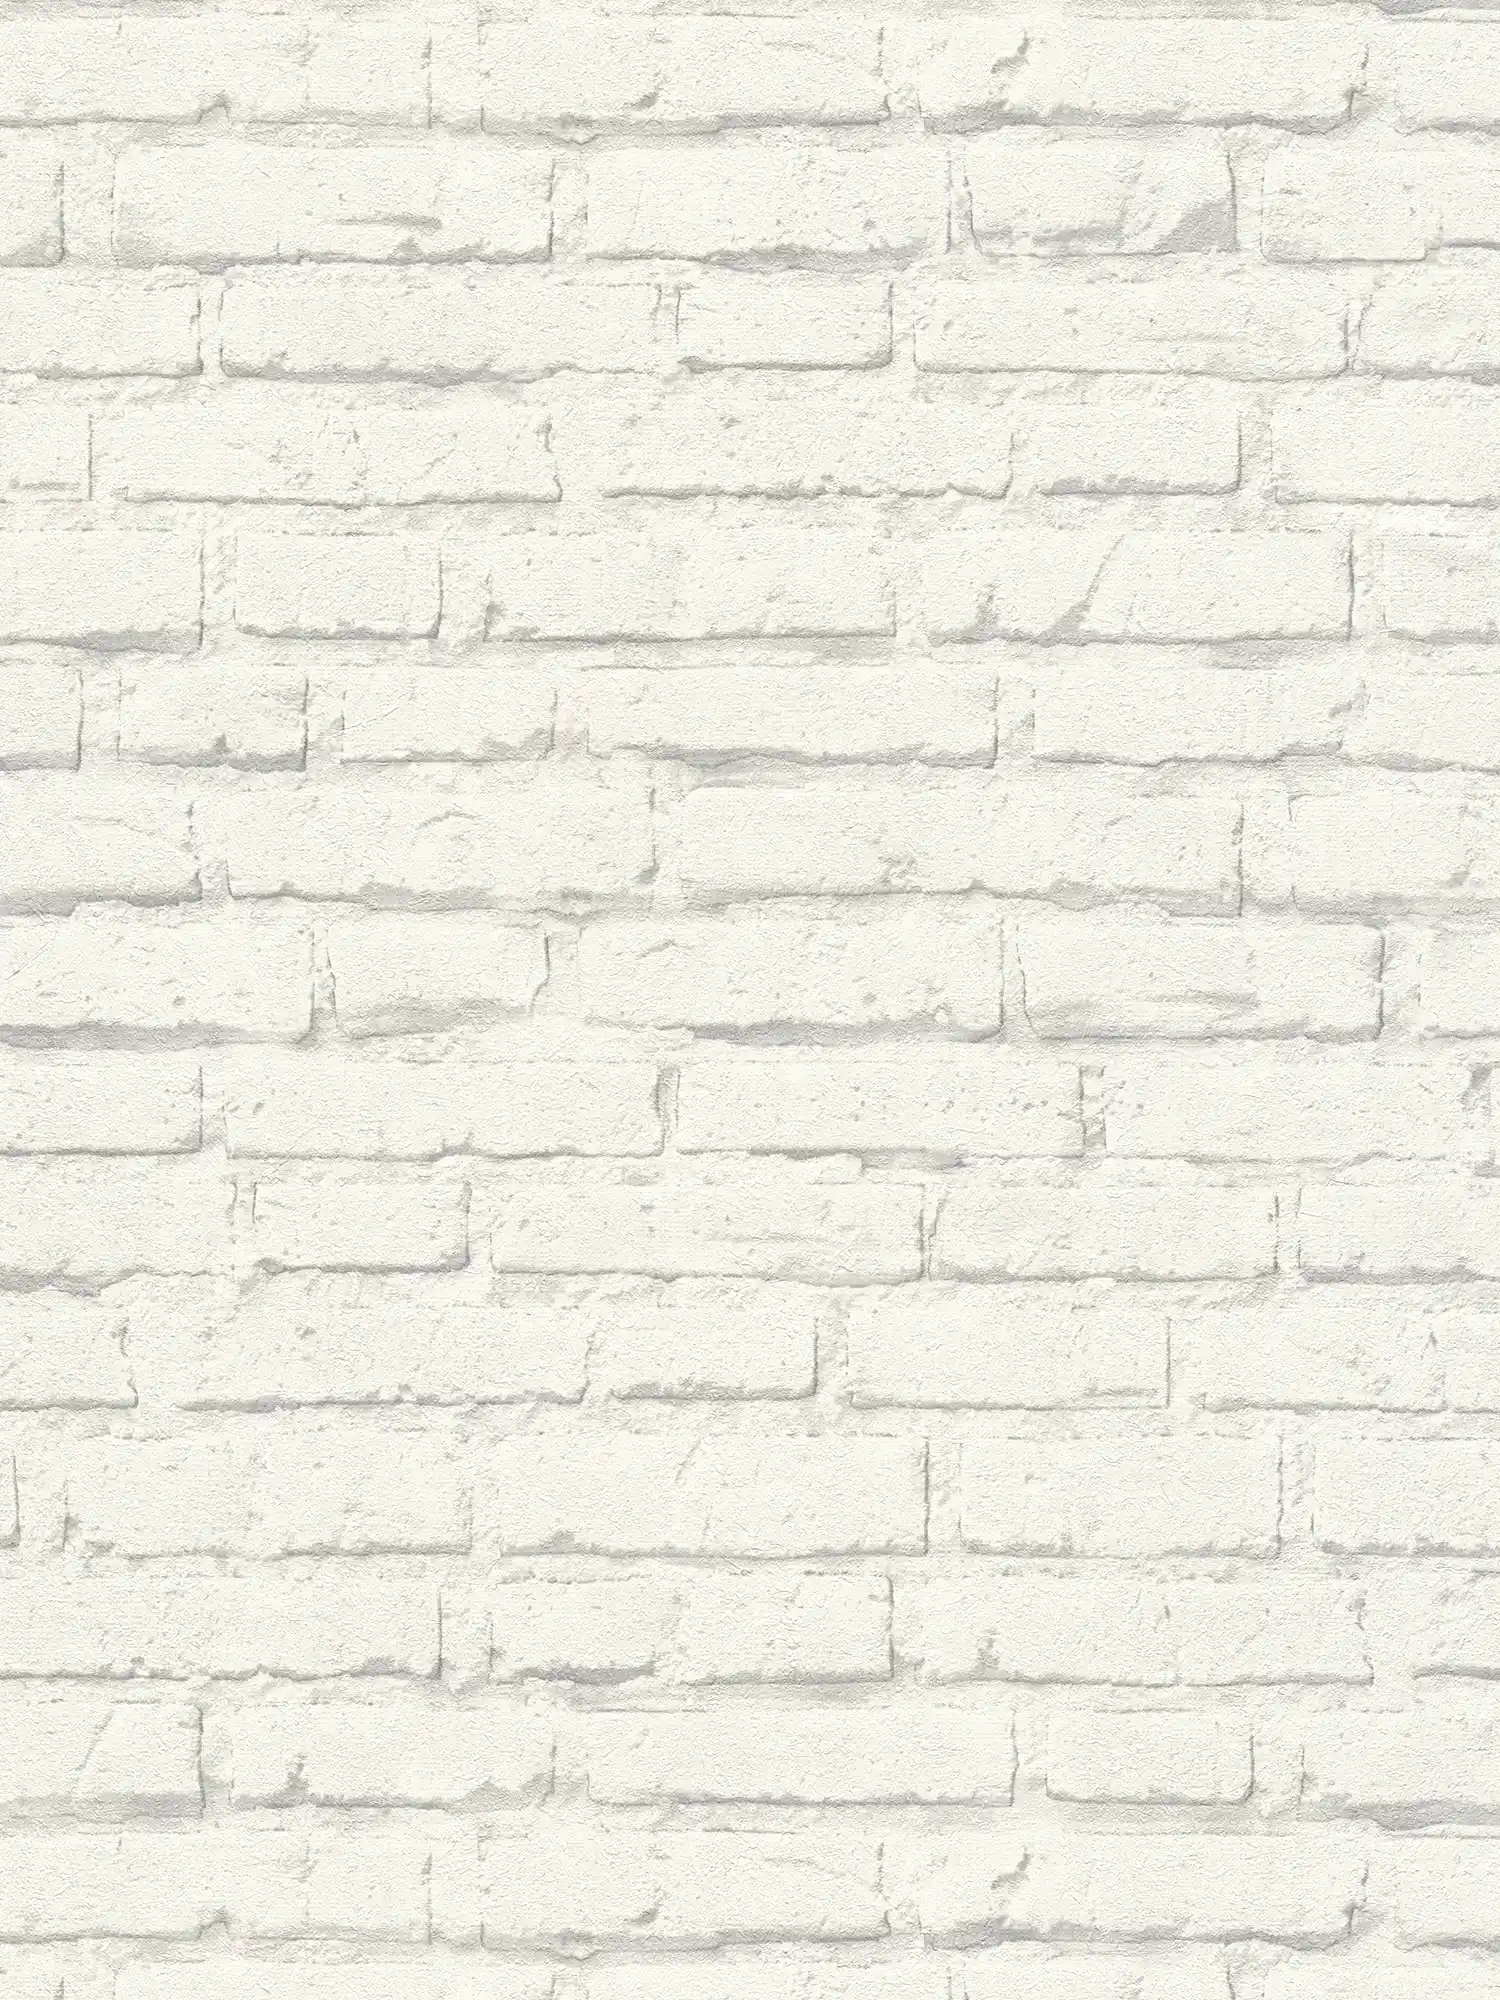 Stone wallpaper, white brick wall with texture pattern - grey, white
